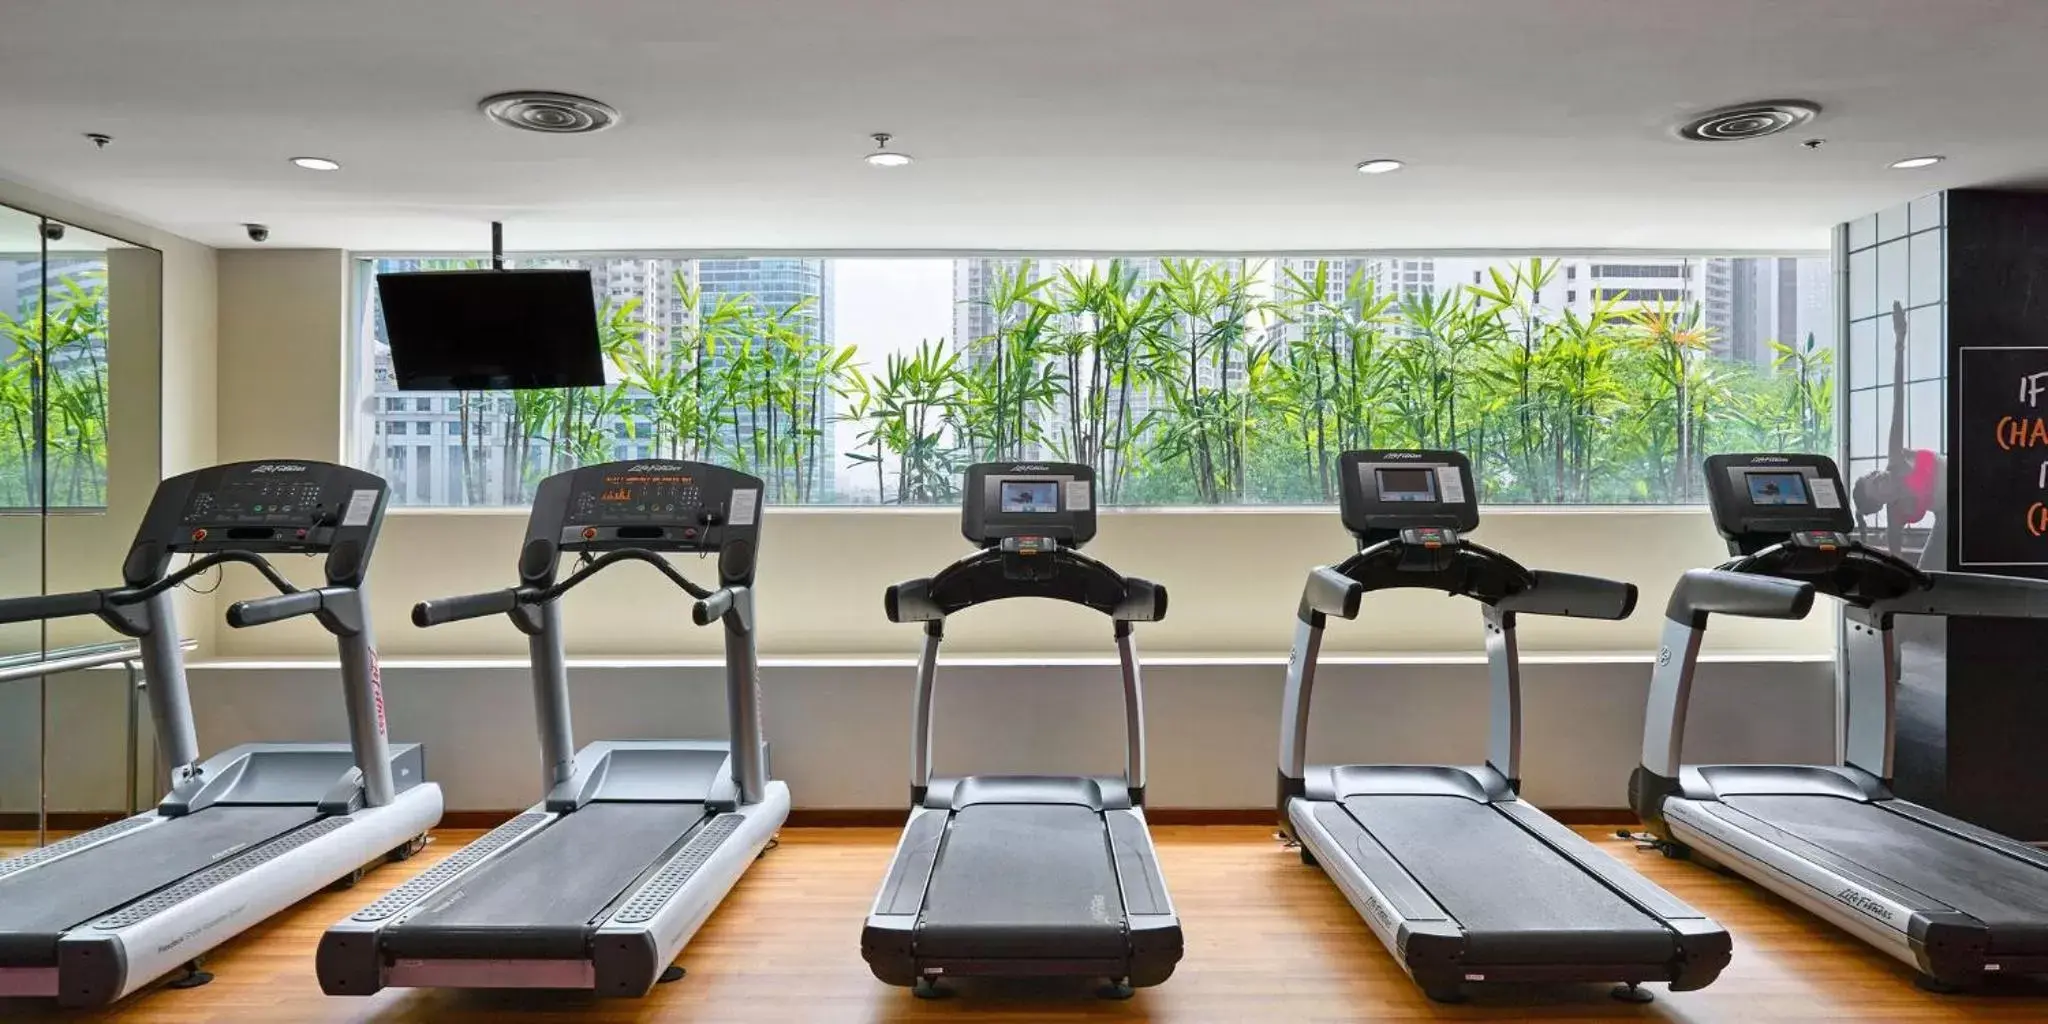 Fitness centre/facilities, Fitness Center/Facilities in InterContinental Kuala Lumpur, an IHG Hotel